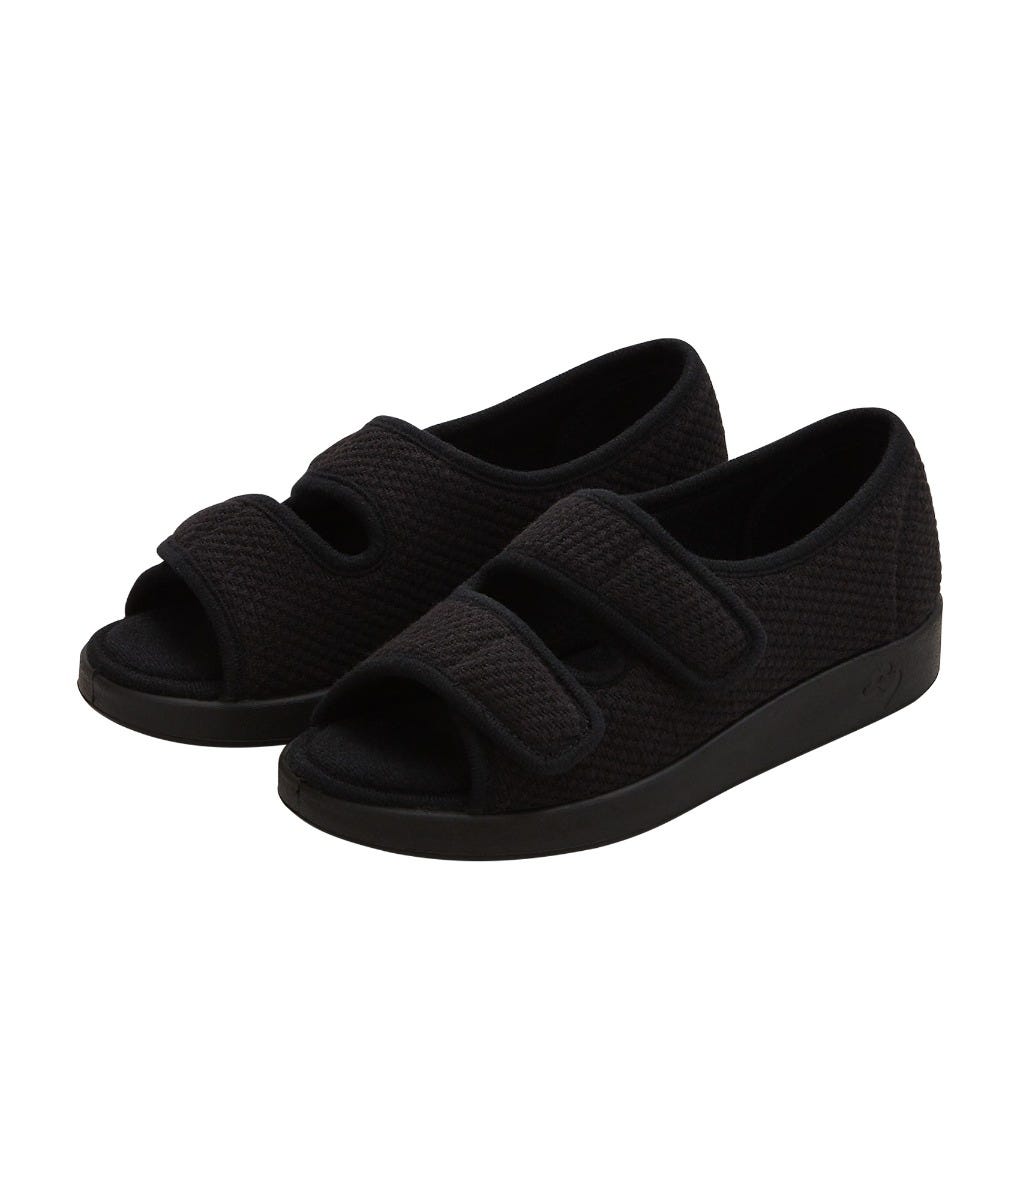 Silverts Women's Easy Closure Sandals - Black - 12